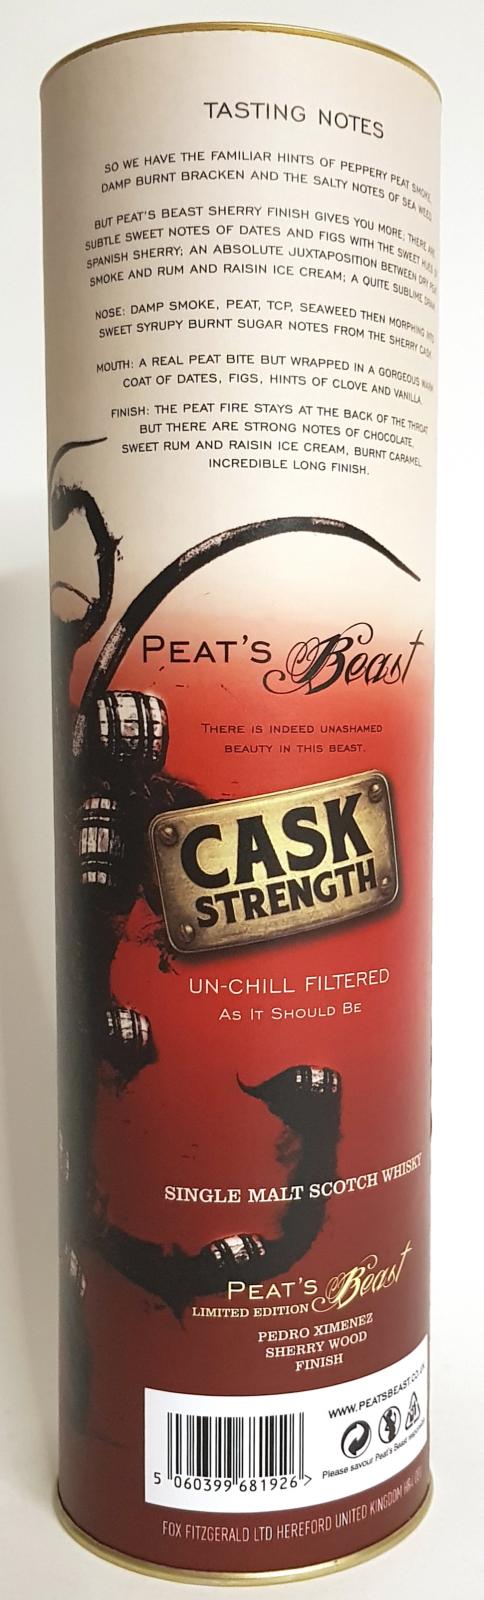 Peat's Beast Cask Strength FF